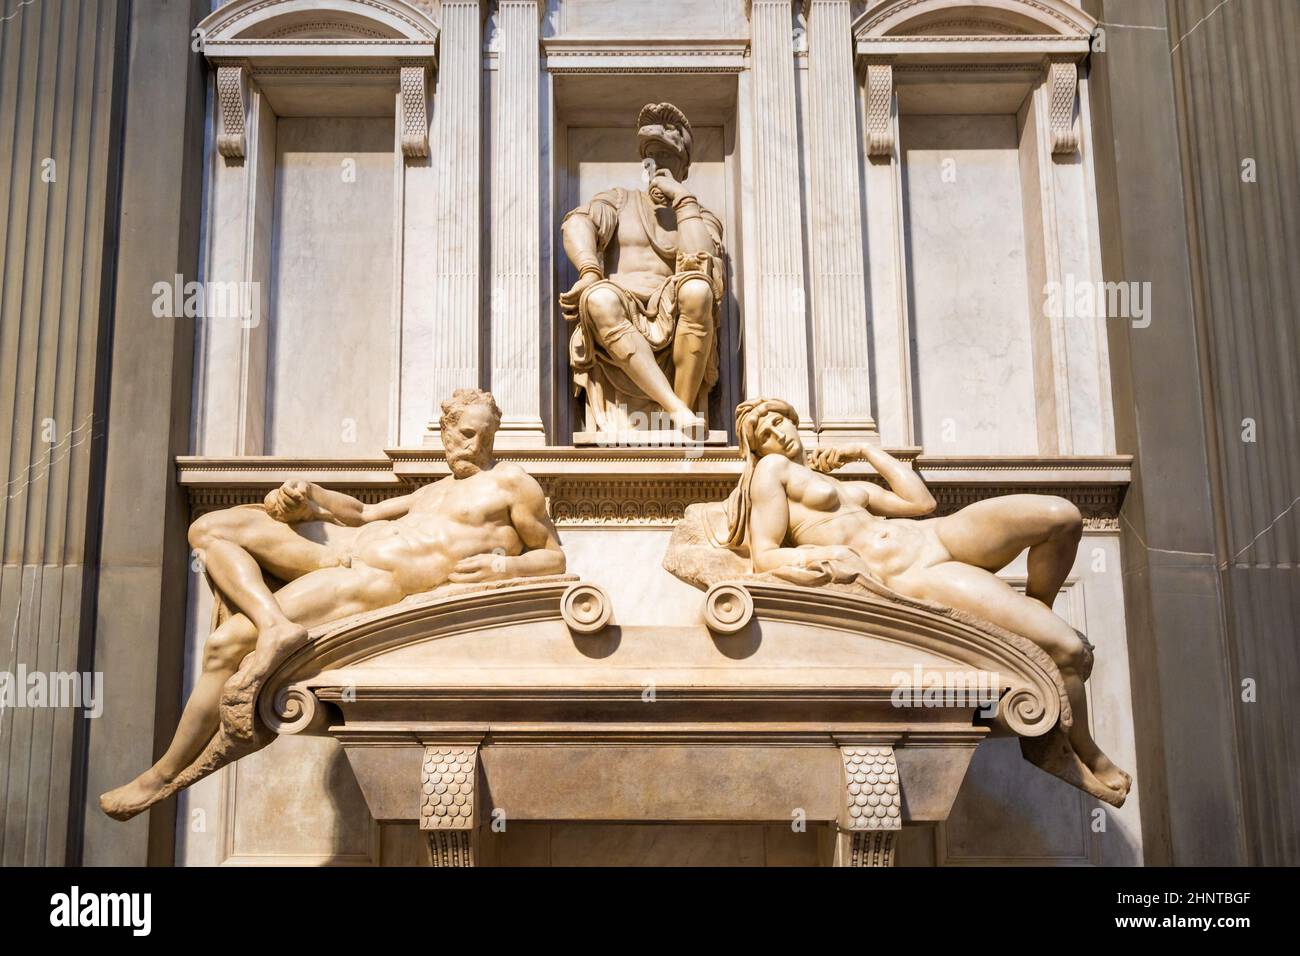 Medici Chapels interior - Cappelle Medicee. Michelangelo Renaissance art in Florence, Italy. Stock Photo